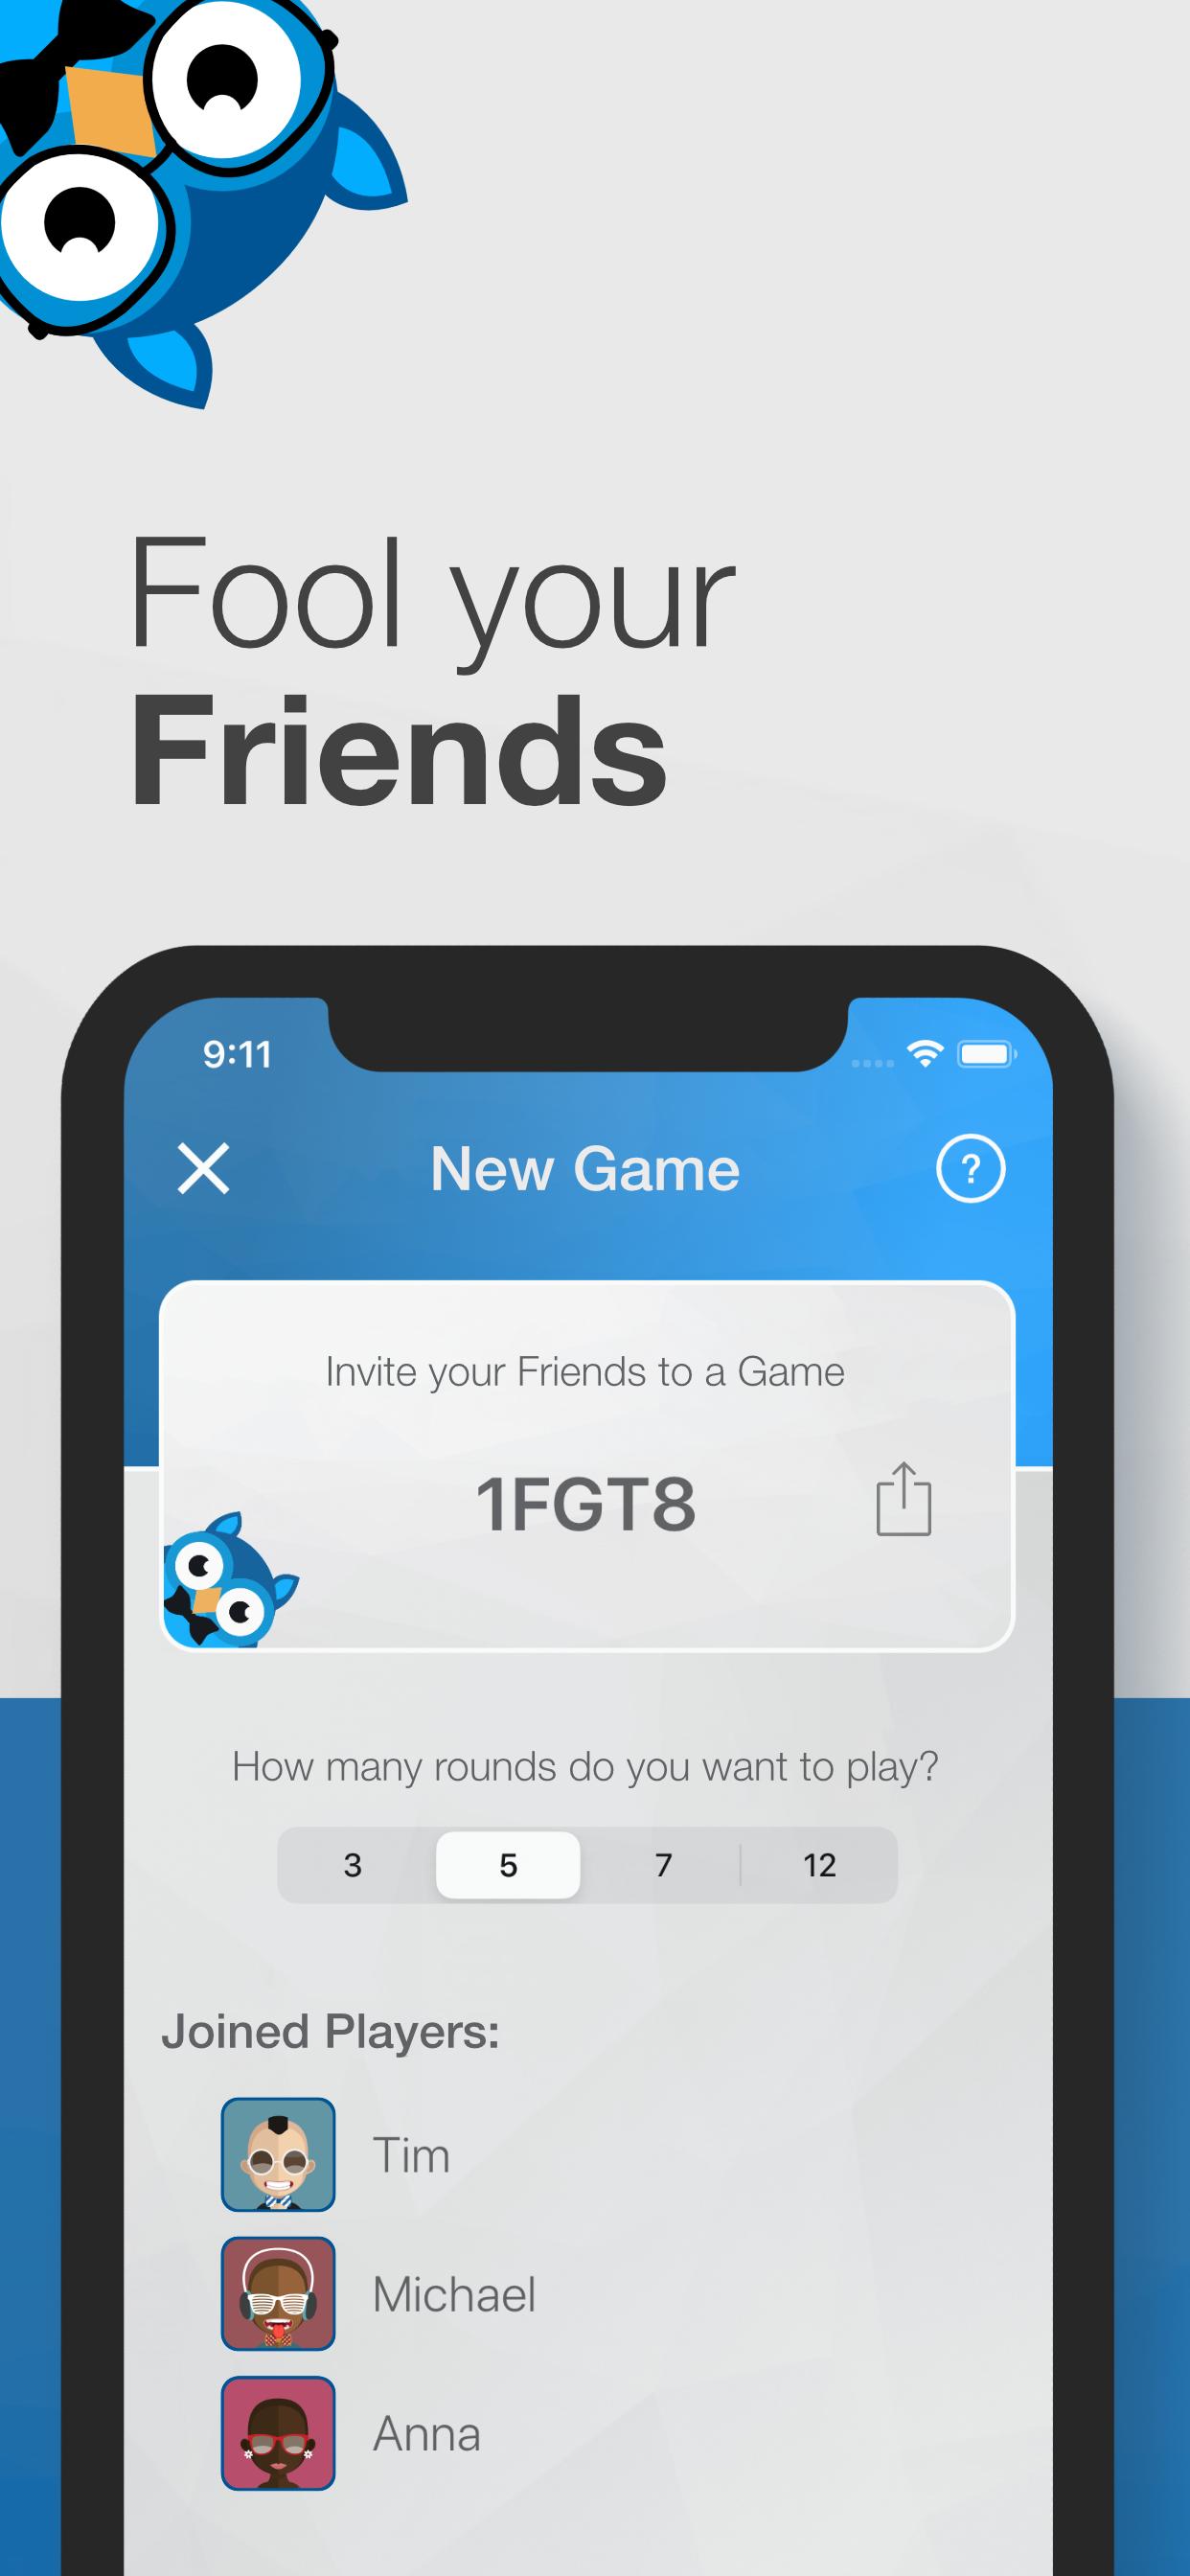 Finto Fool your Friends 1.13.1 Screenshot 1